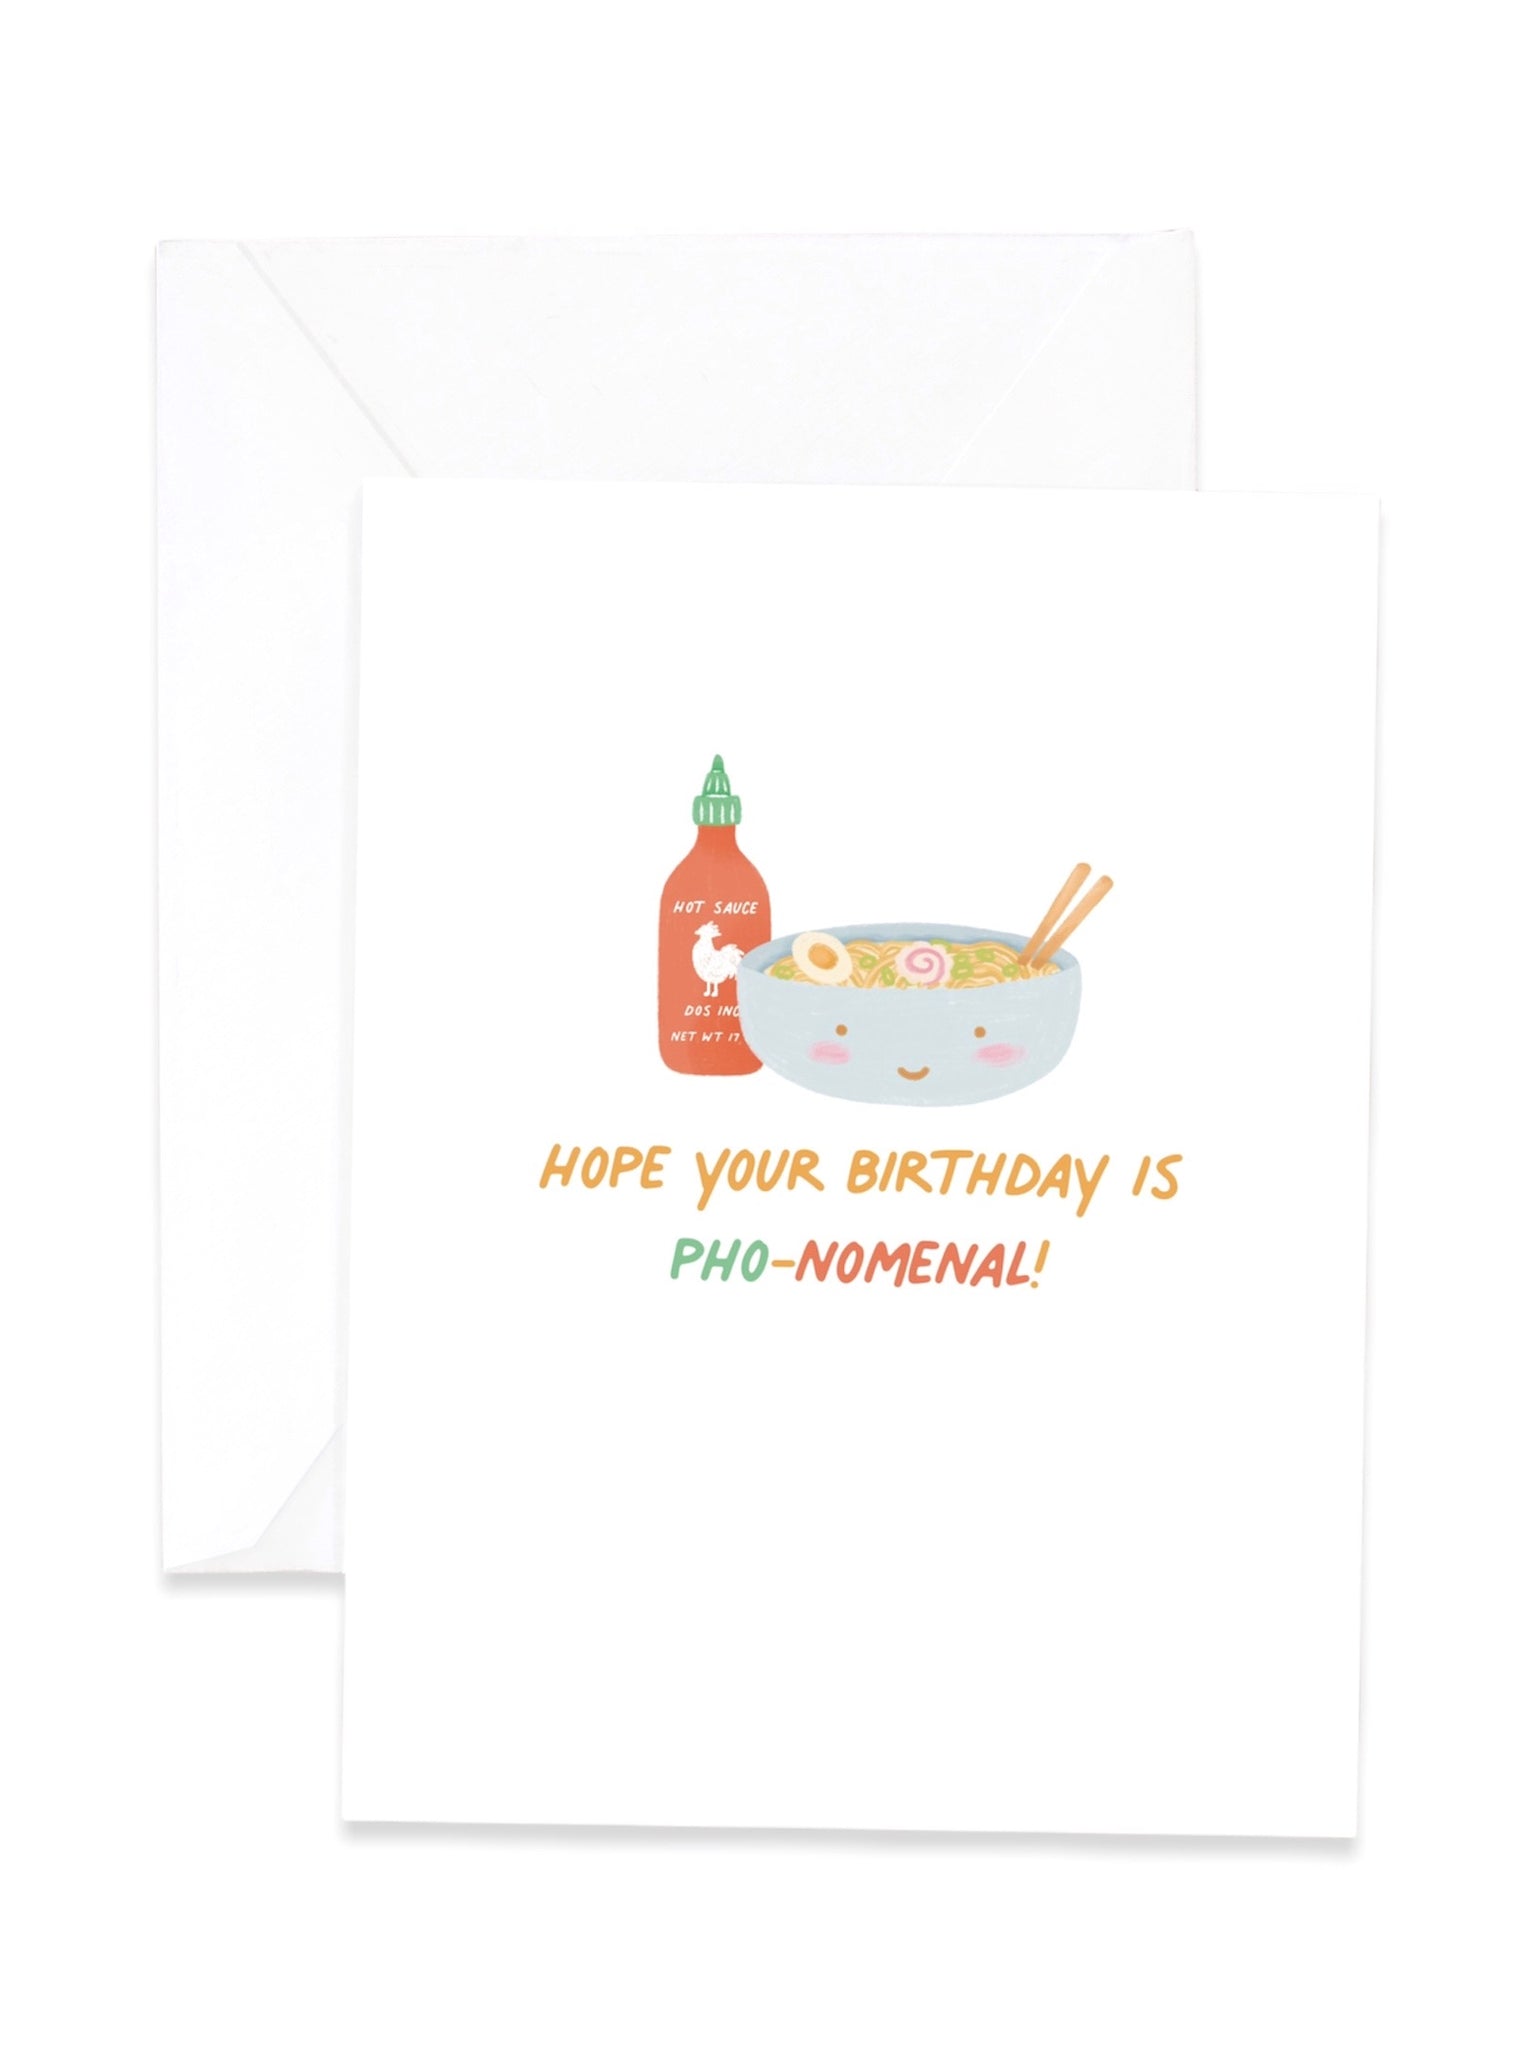 Pho-nomenal Birthday Greeting Card